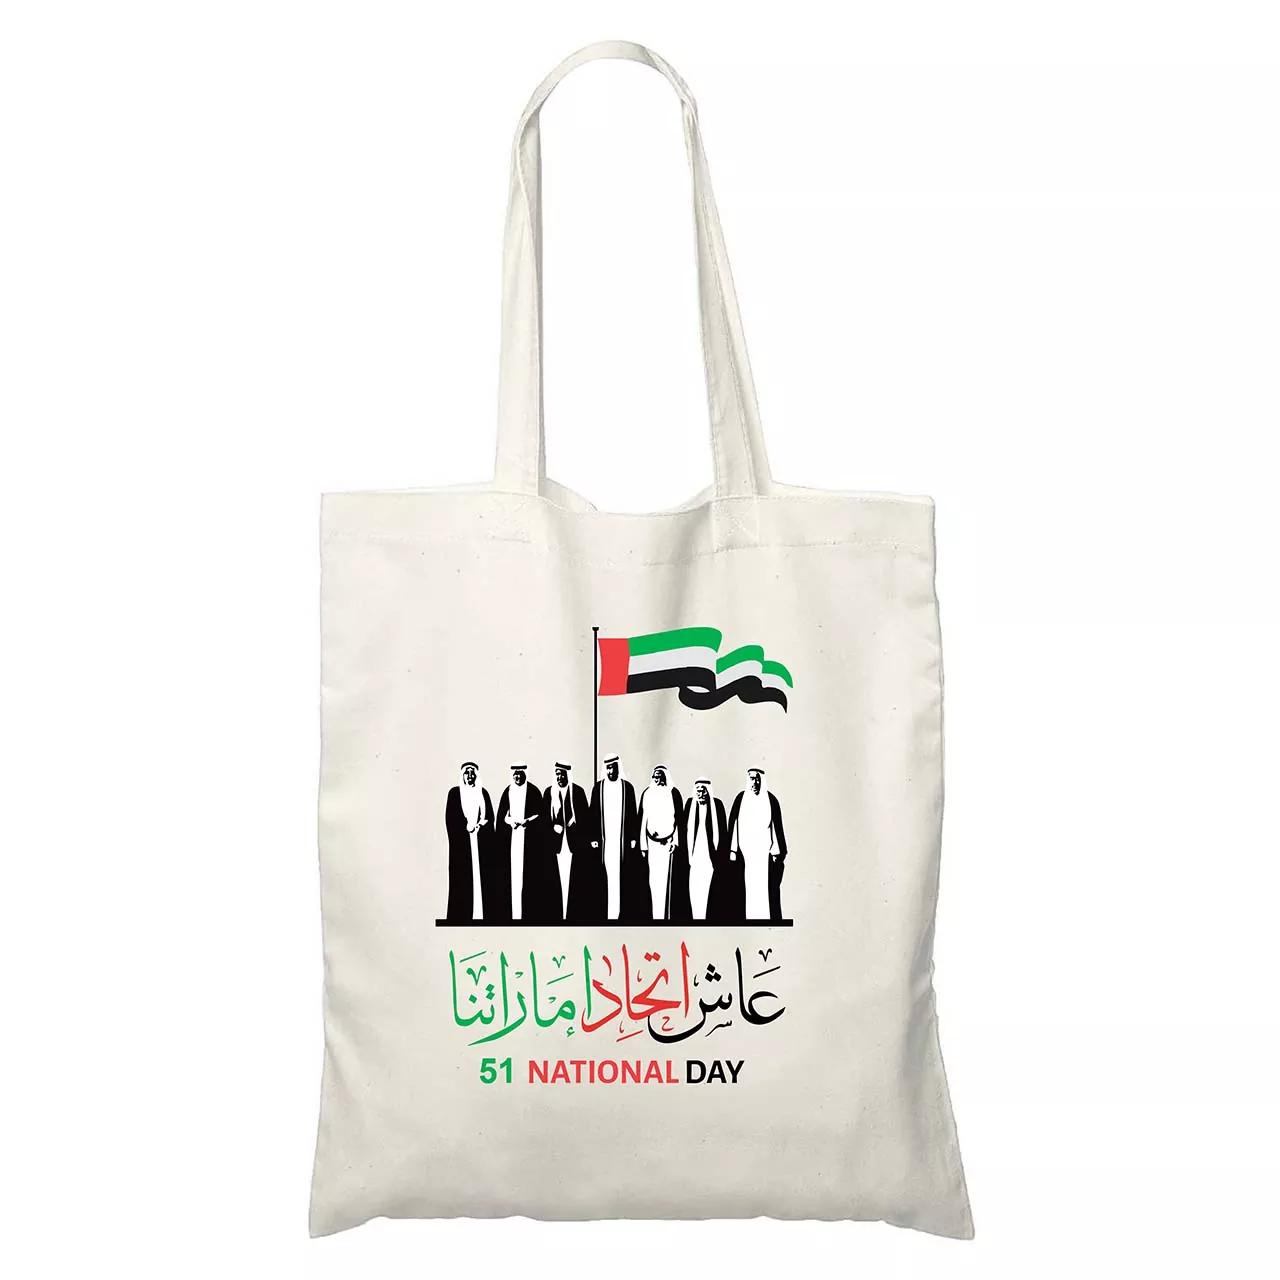 UAE National Day Cotton Gift Bag UAE Cotton Bag